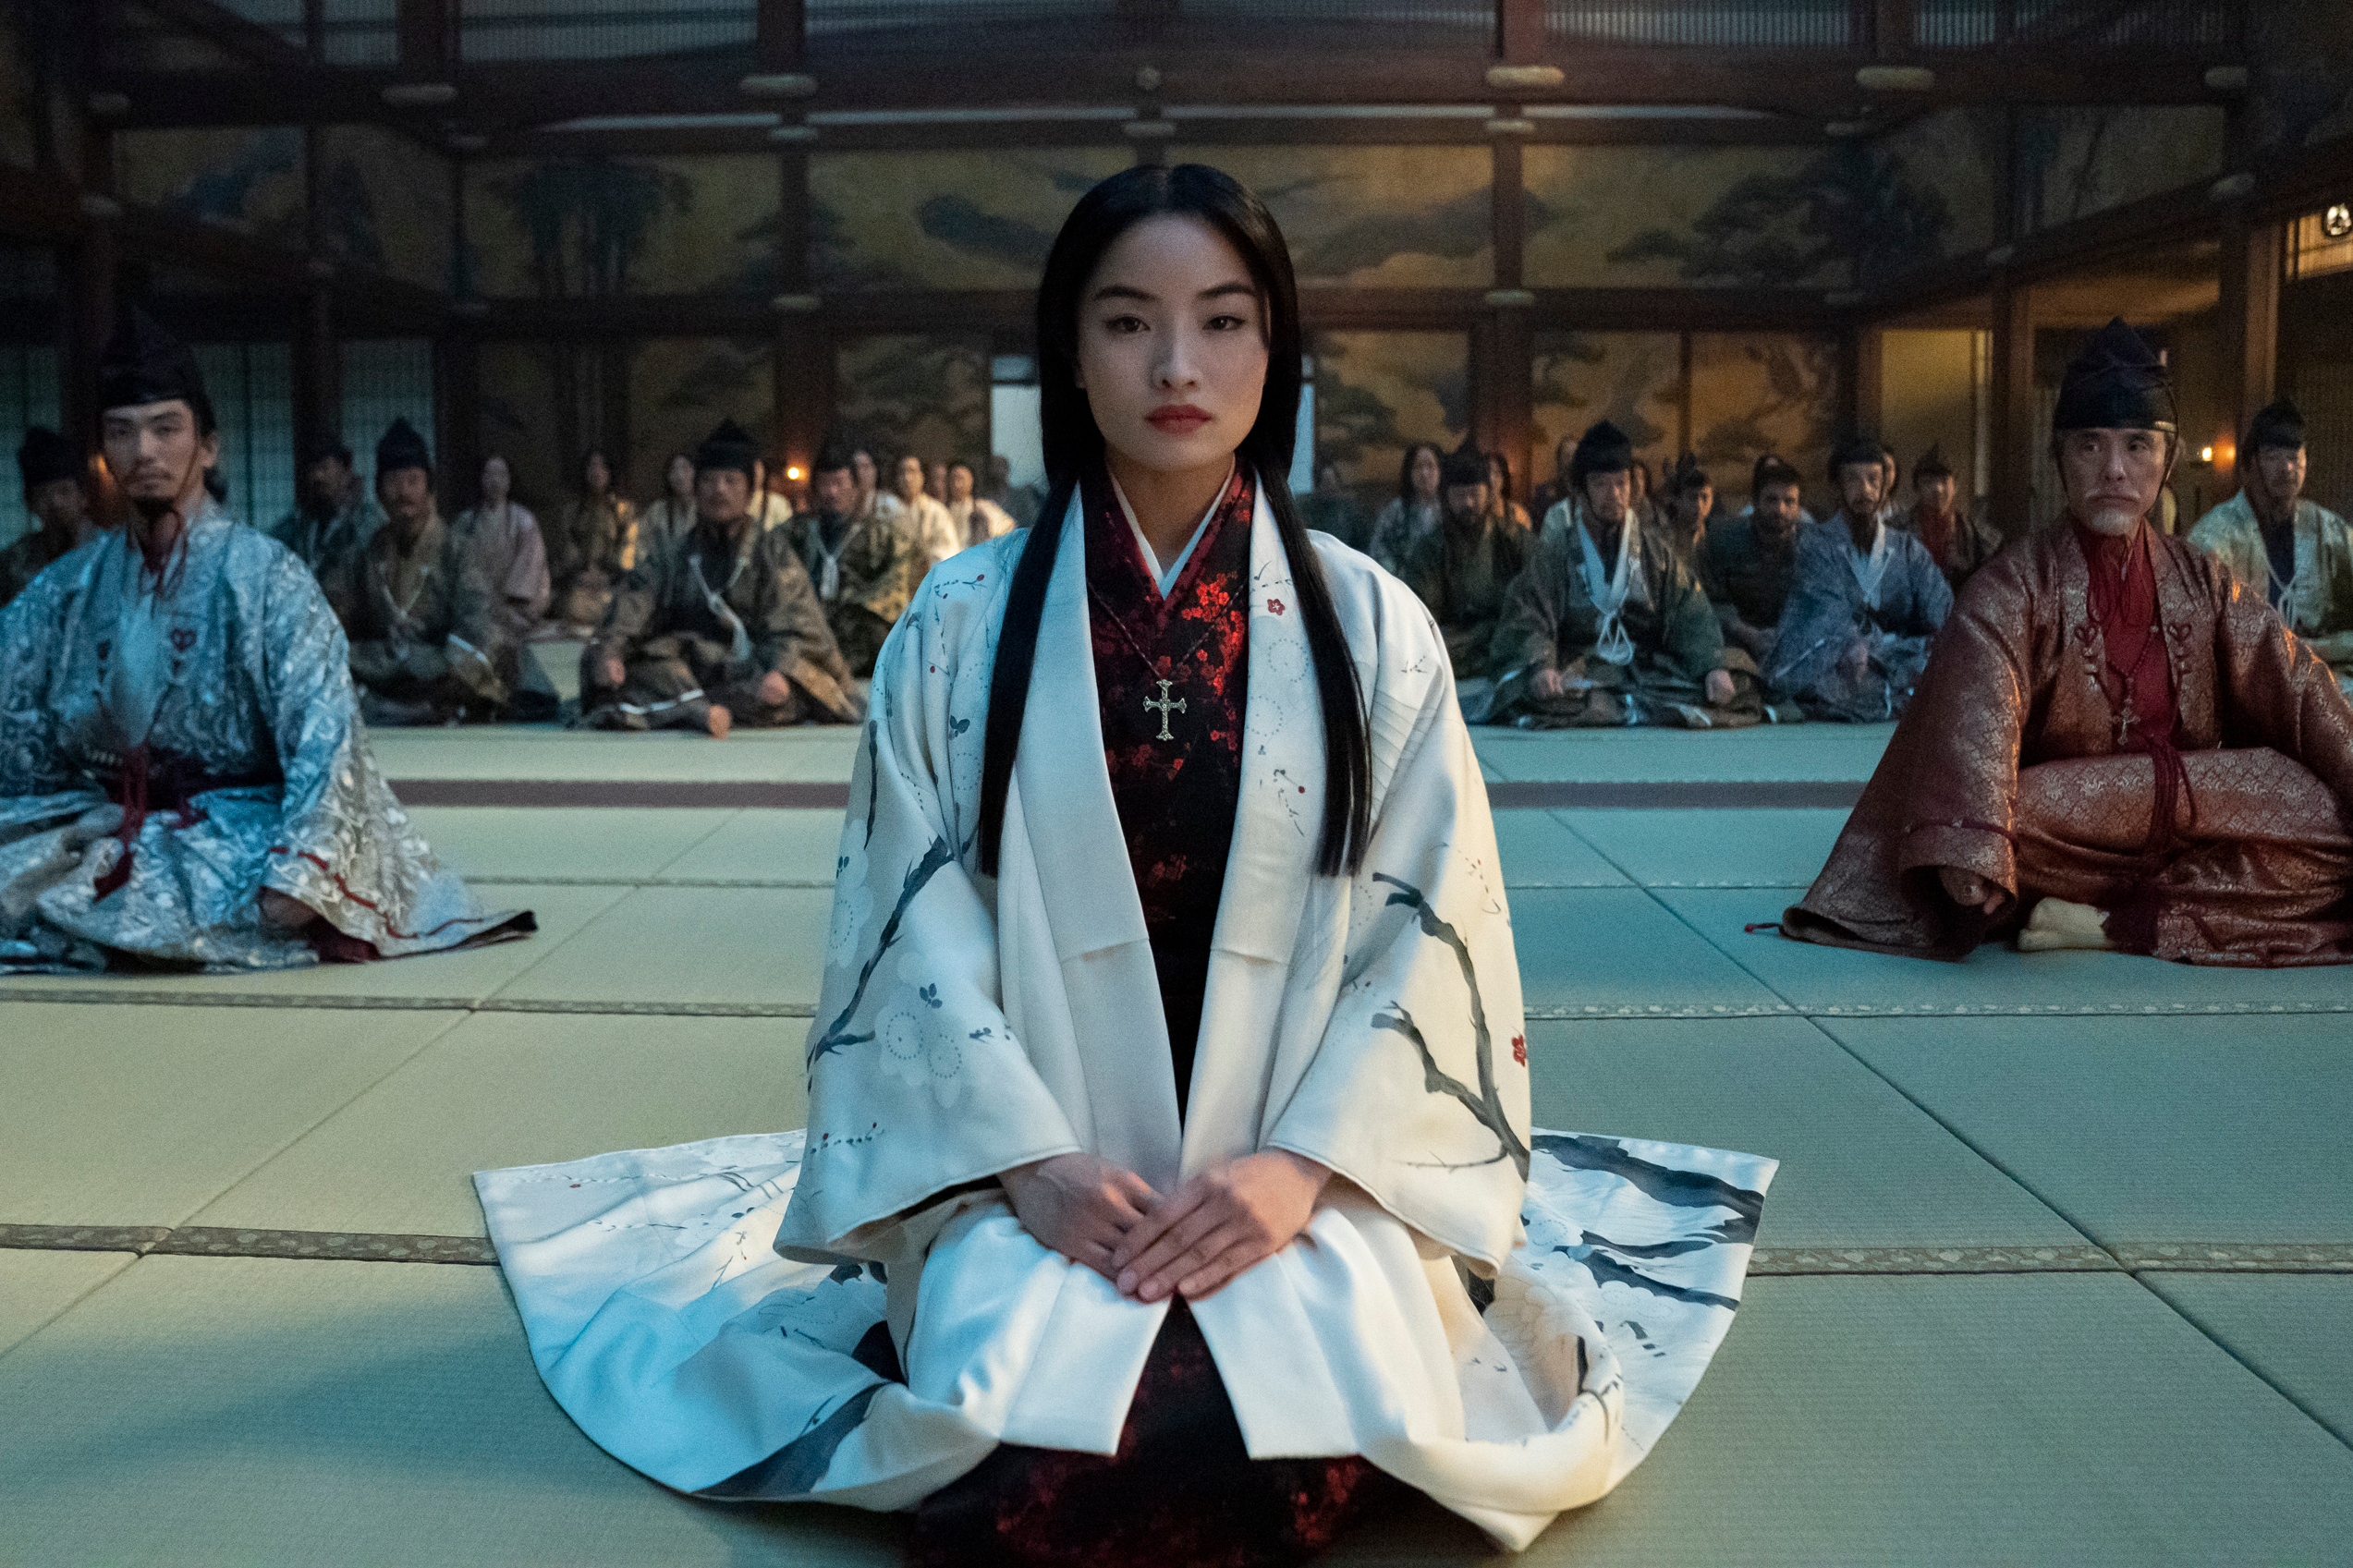 Anna Sawai kneels in a crowded room in Shōgun.